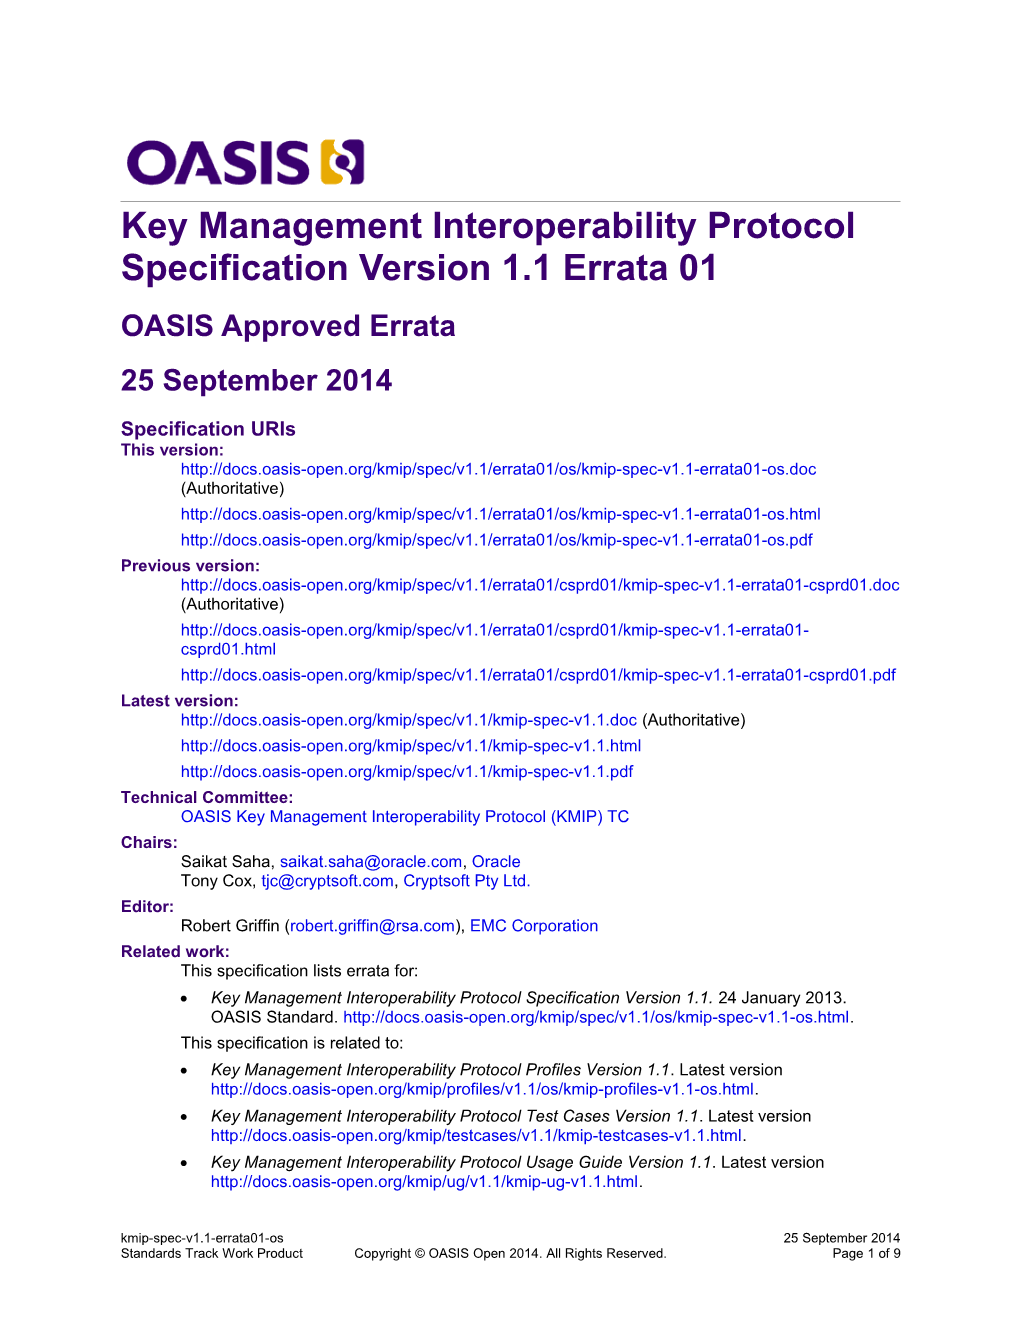 Key Management Interoperability Protocol Specification Version 1.1 Errata 01